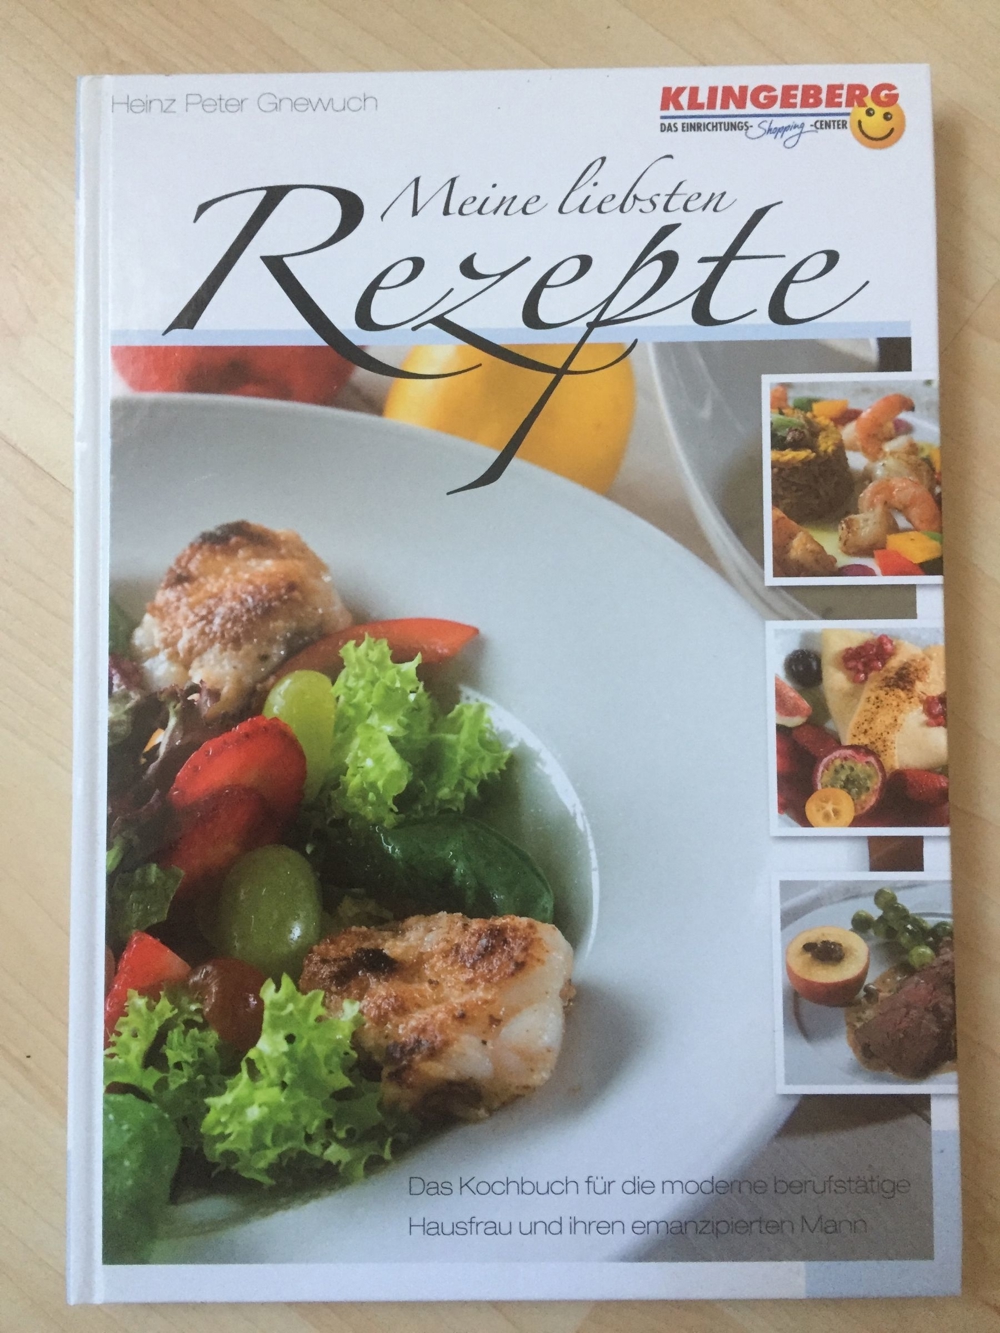 Meine liebsten Rezepte - Kochbuch